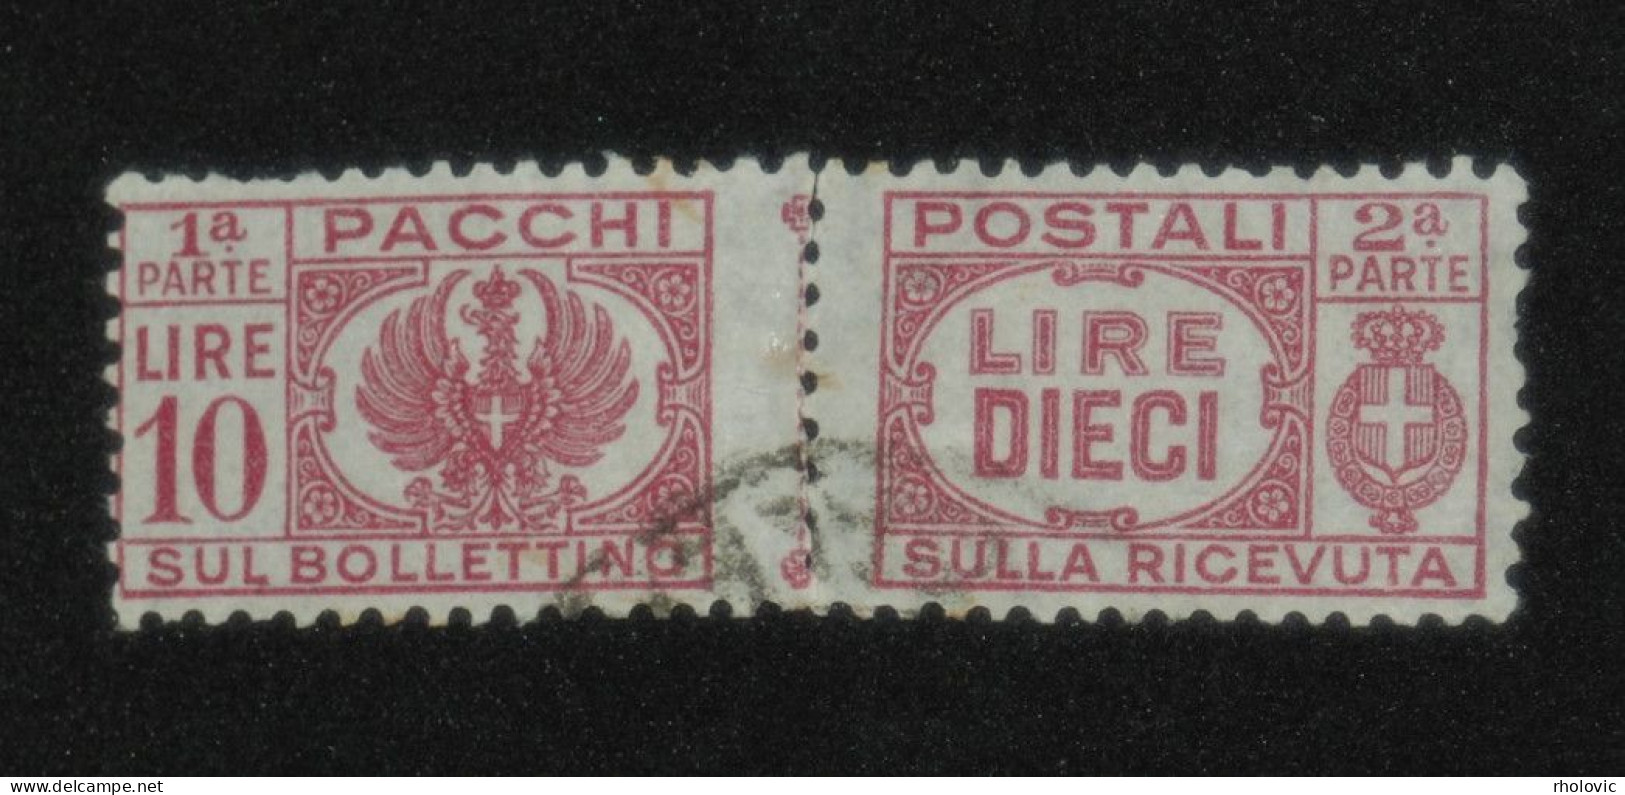 ITALY 1946, Parcel, 10 Lire, Lilac, Mi #P64, Used, CV: €120 - Colis-postaux